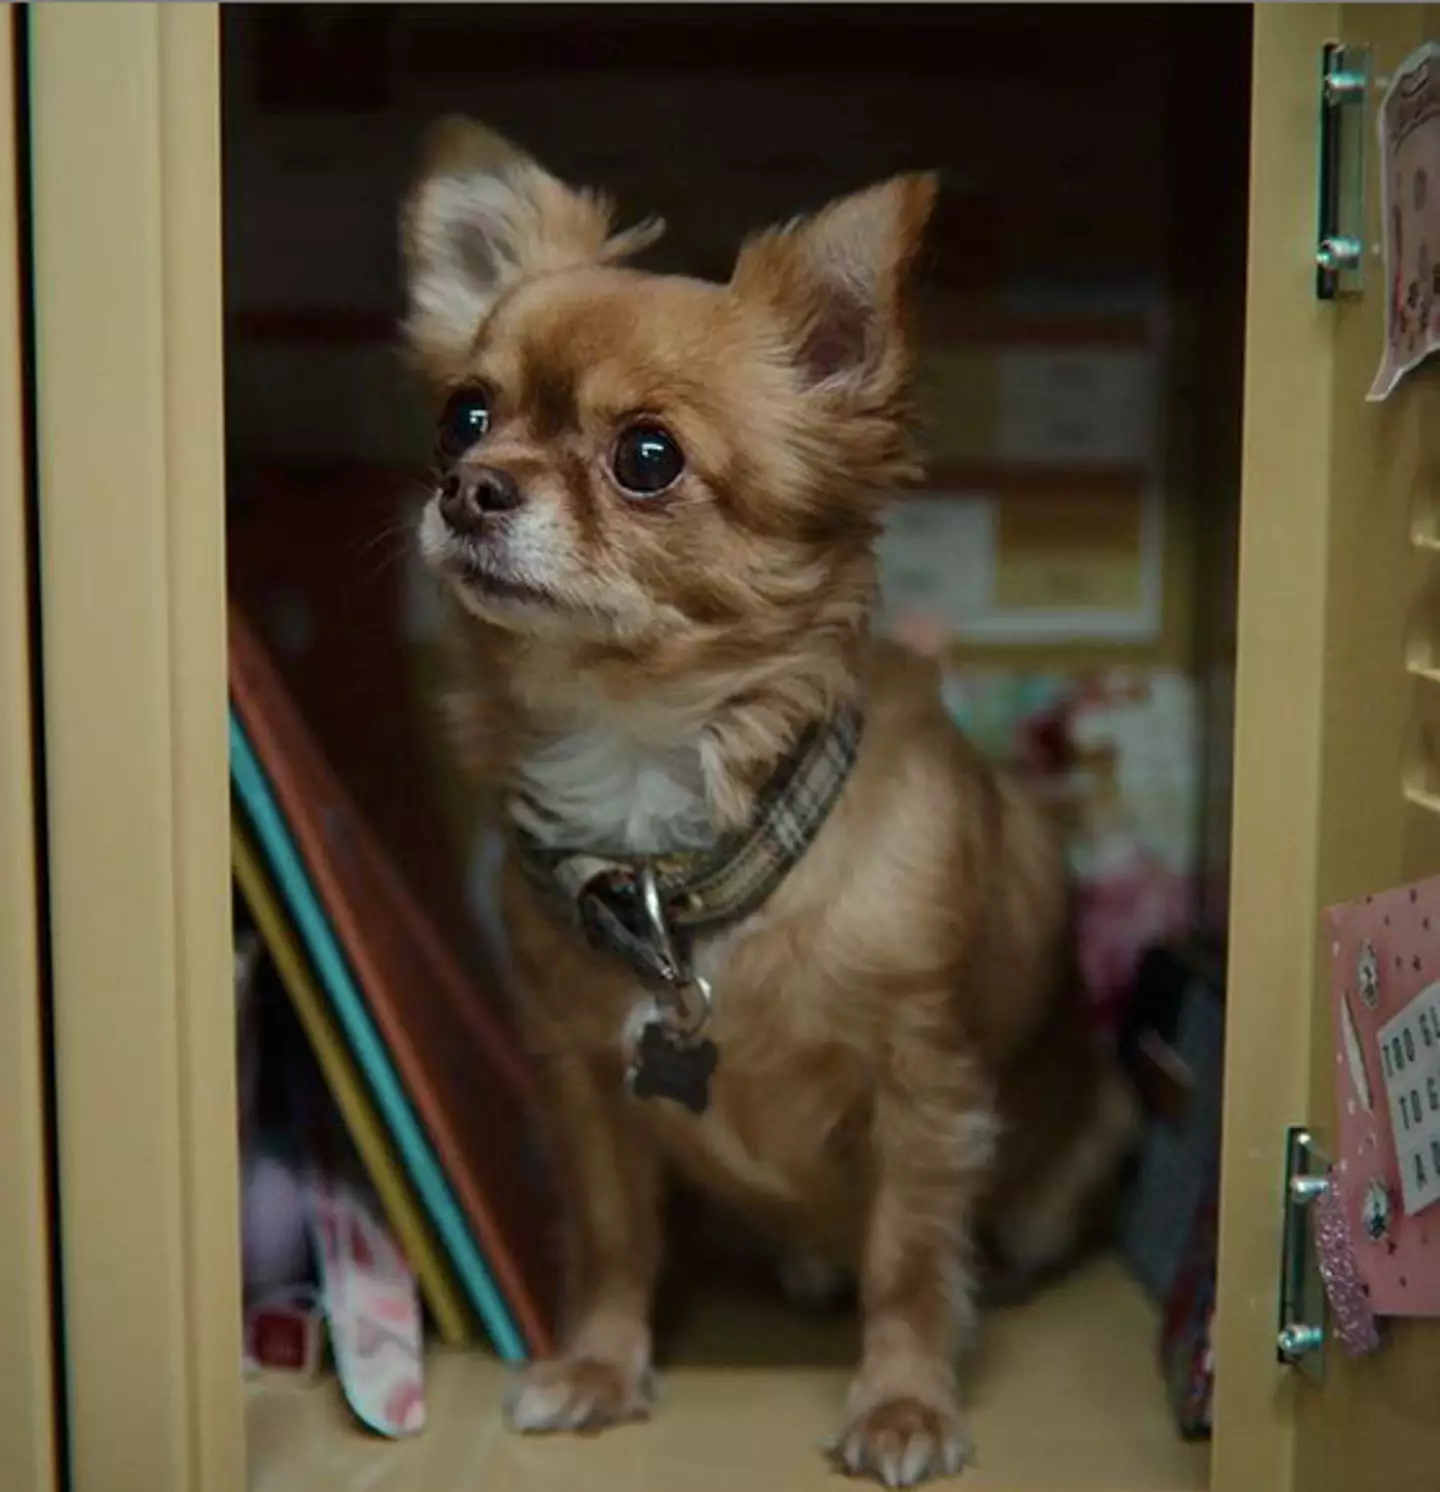 Ruby keeps her pet dog Baby in her locker (